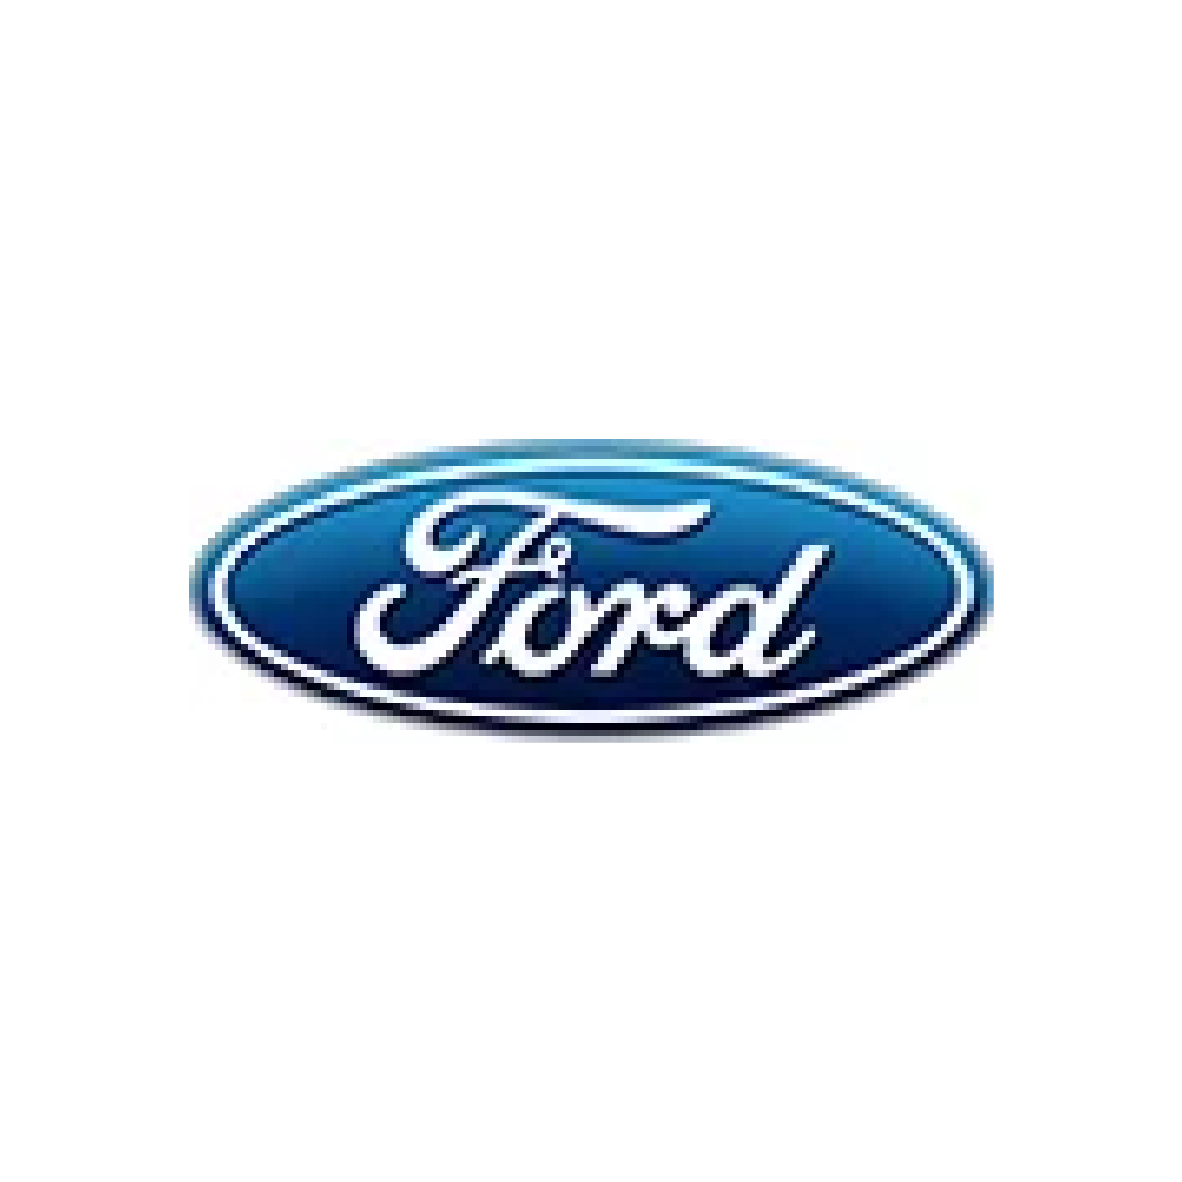  Ford logo 